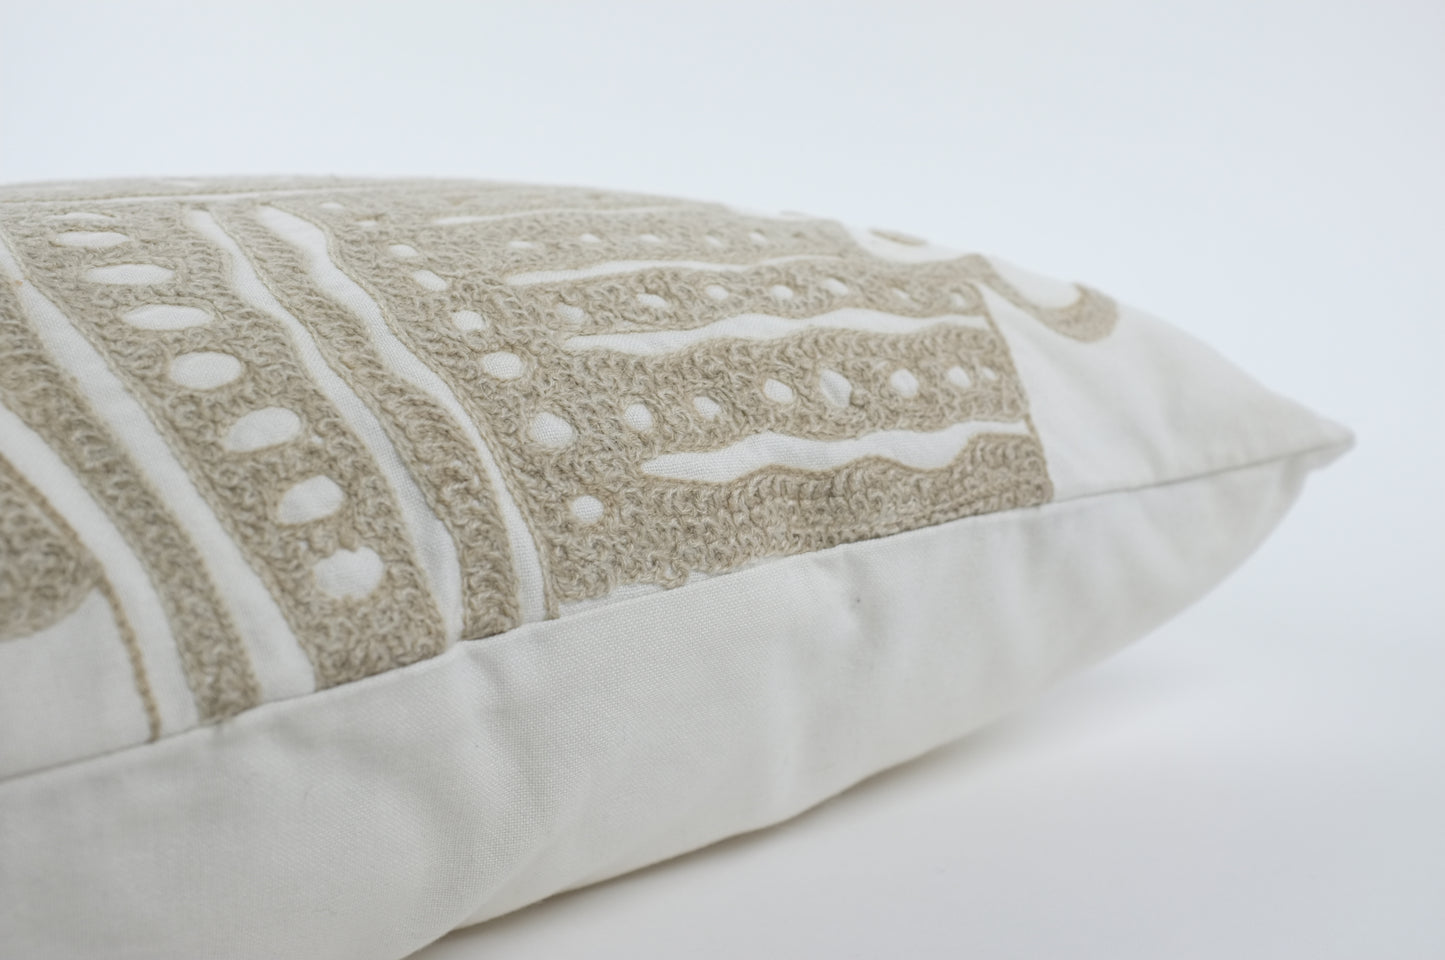 White and Khaki Elephant Square Pillow